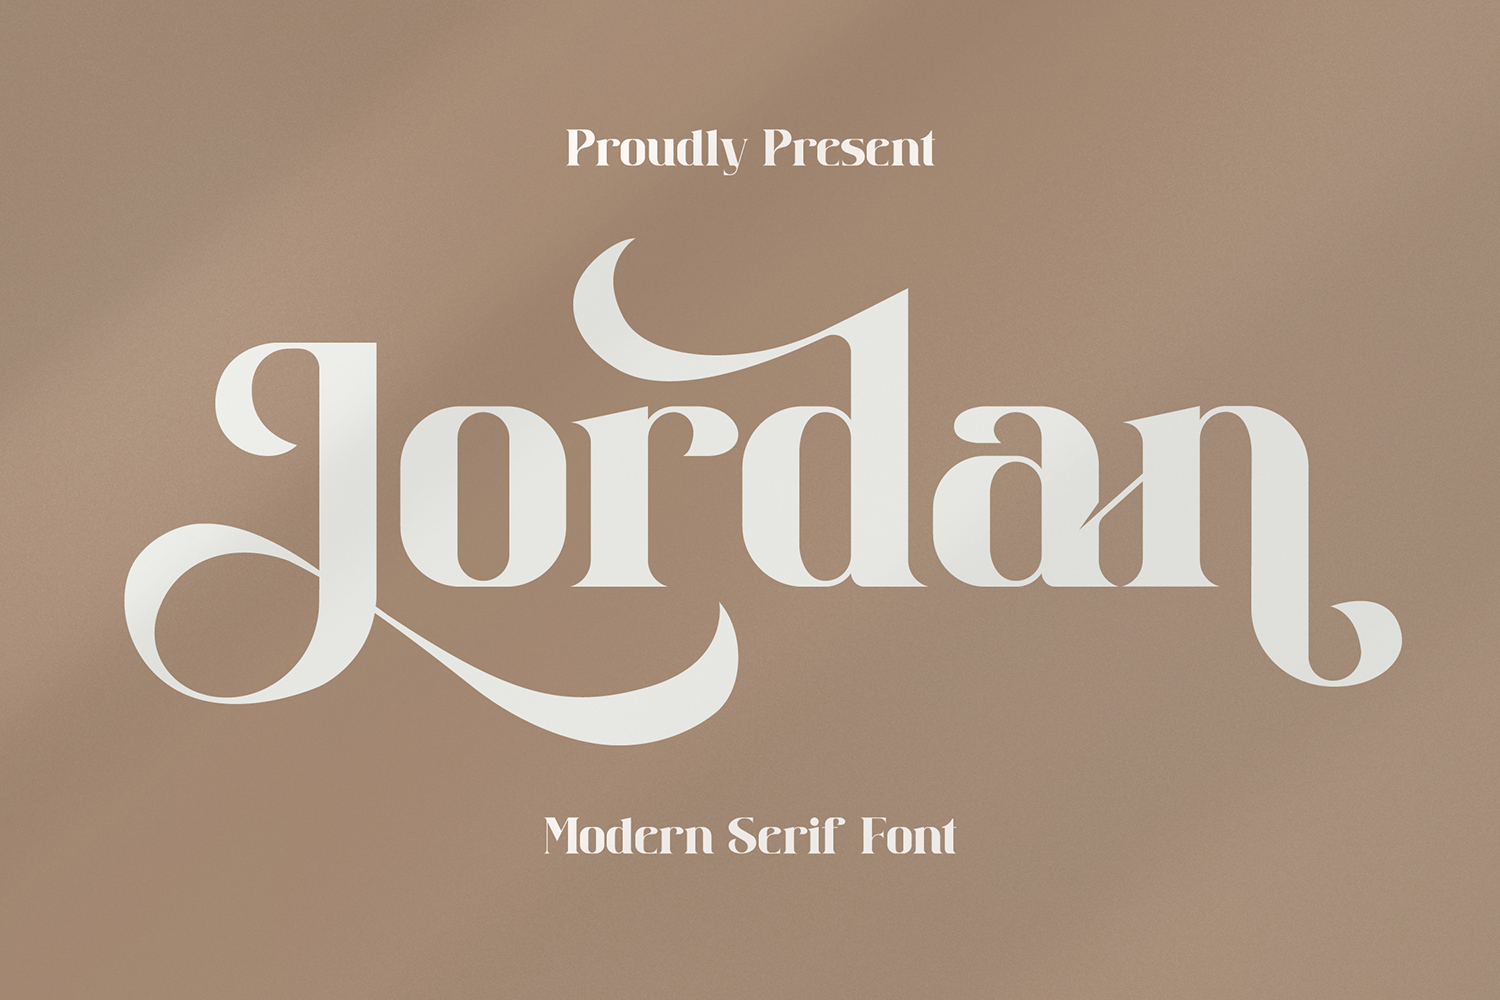 Jordan Free Font